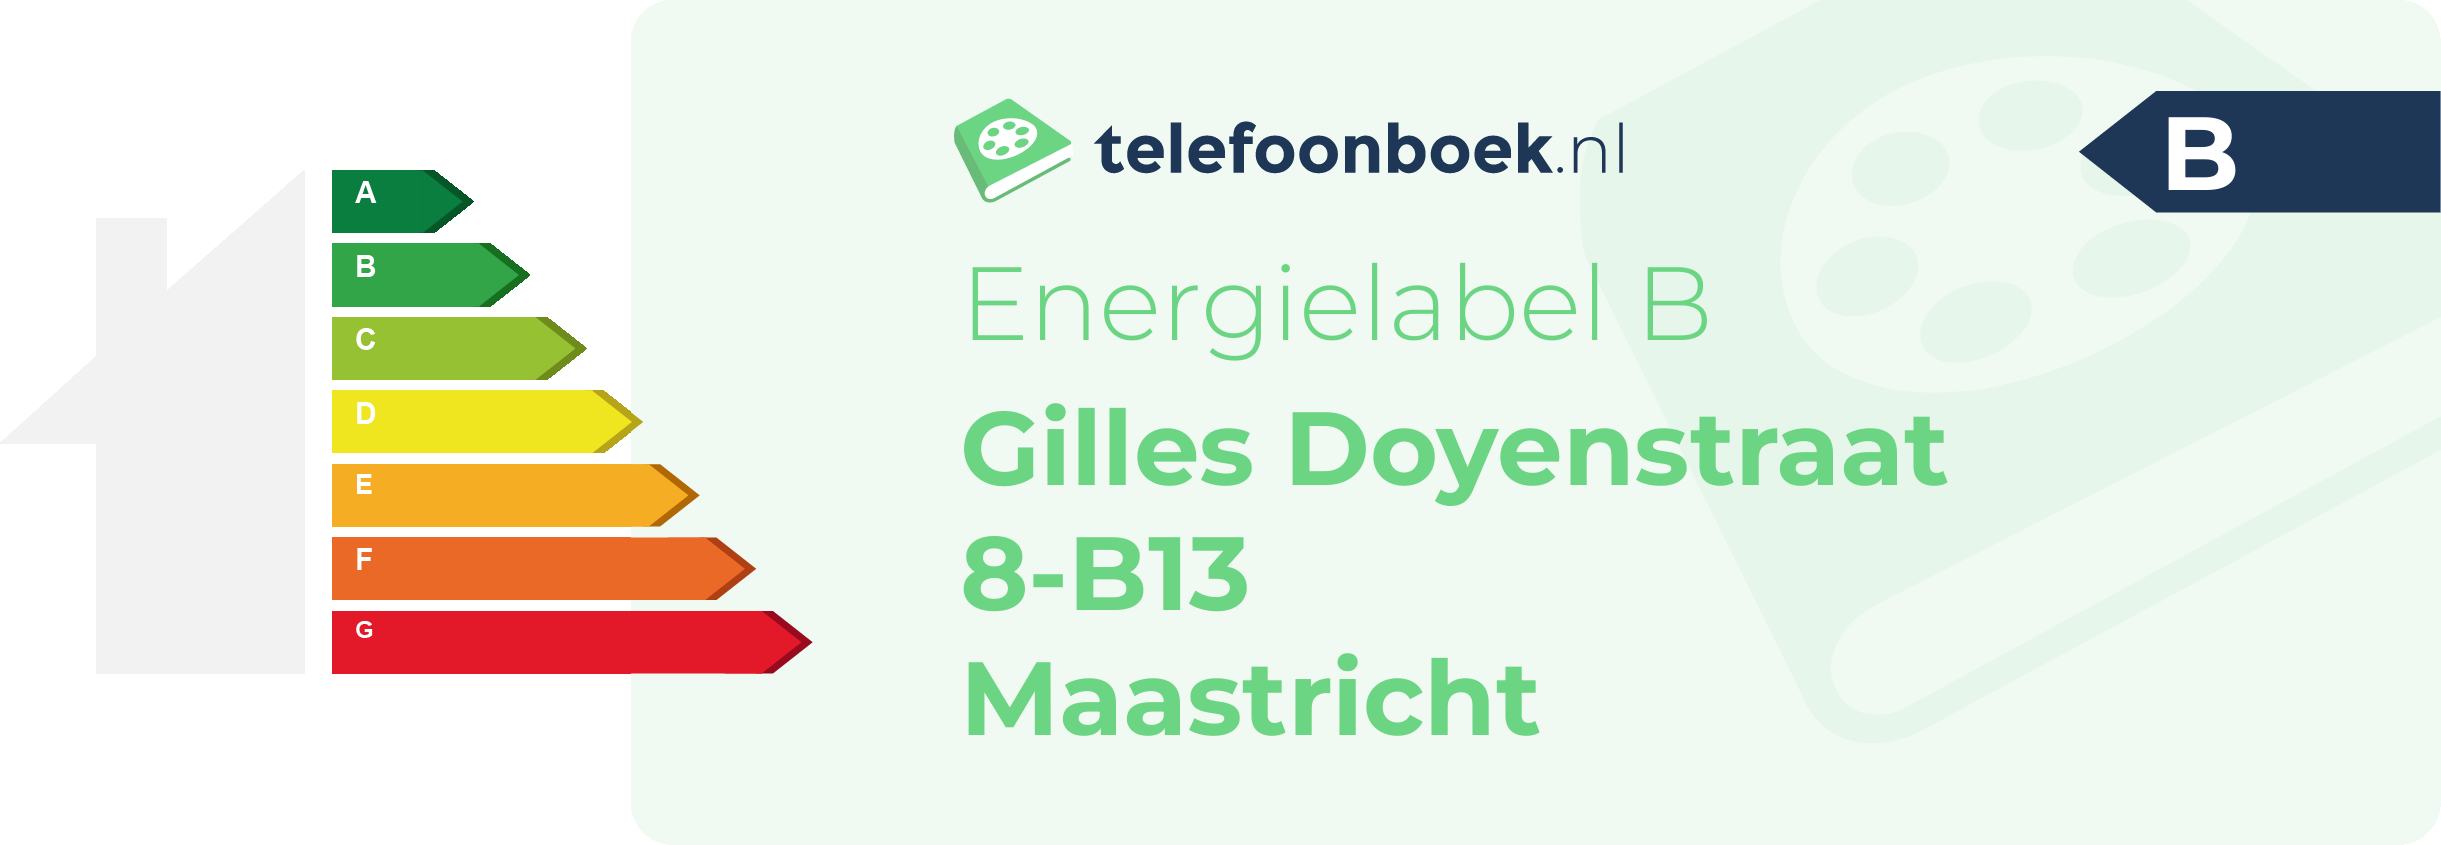 Energielabel Gilles Doyenstraat 8-B13 Maastricht